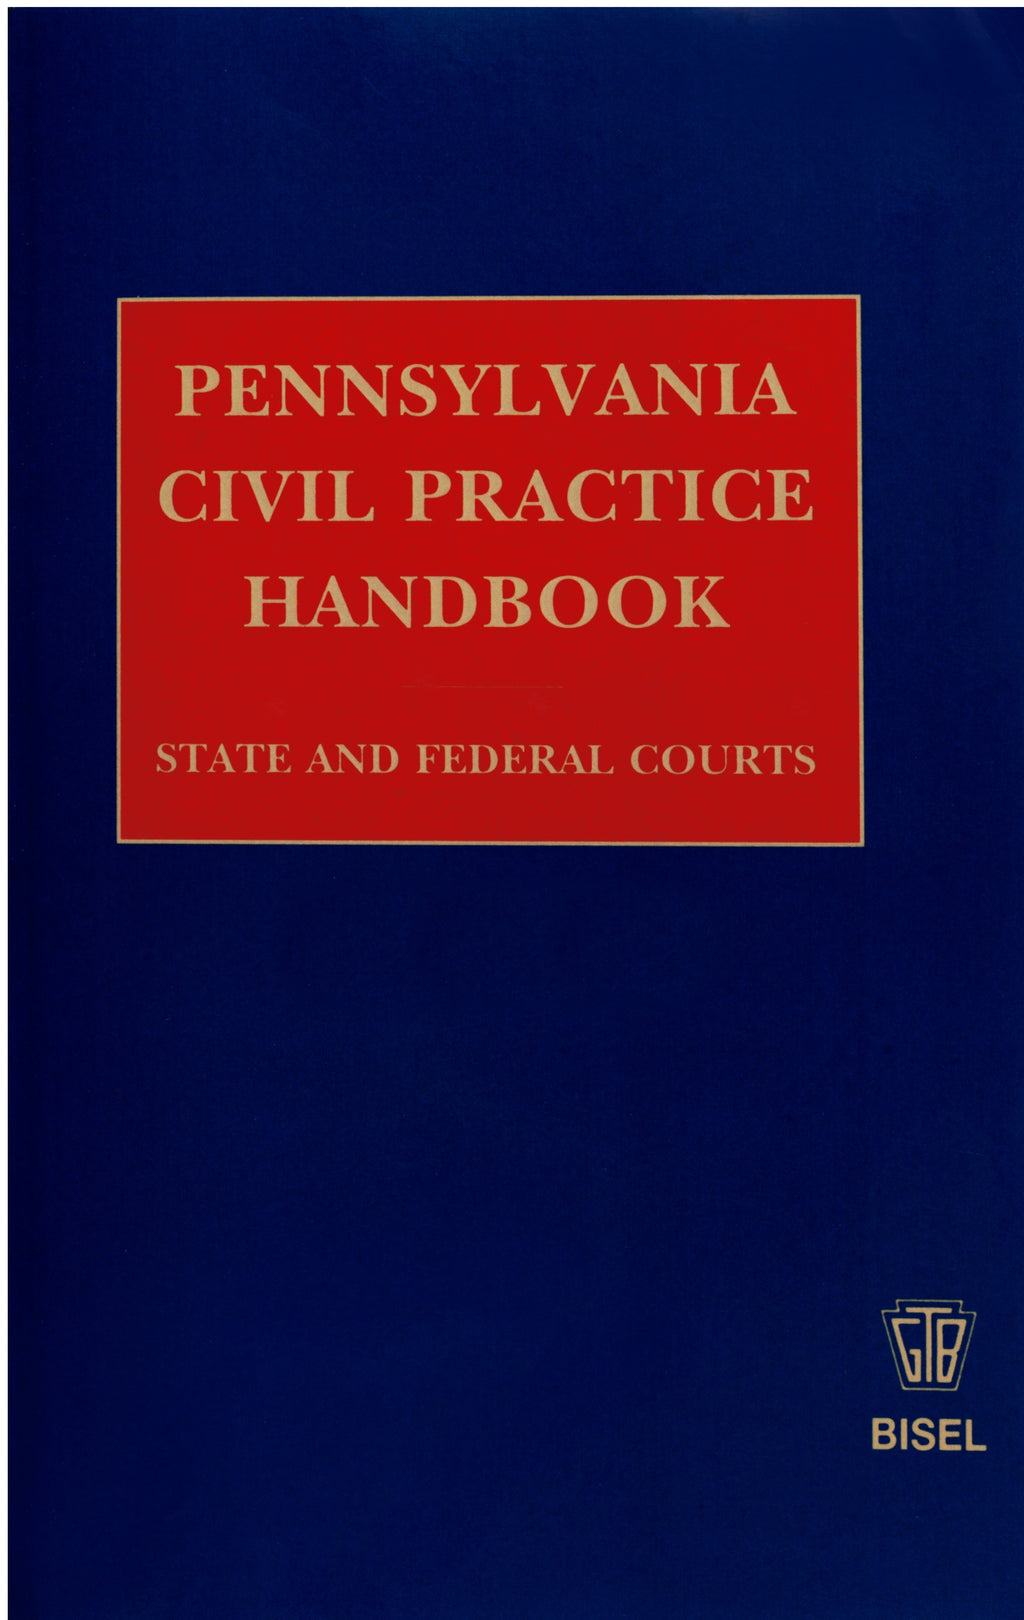 Pennsylvania Civil Practice Handbook (includes book + digital download)